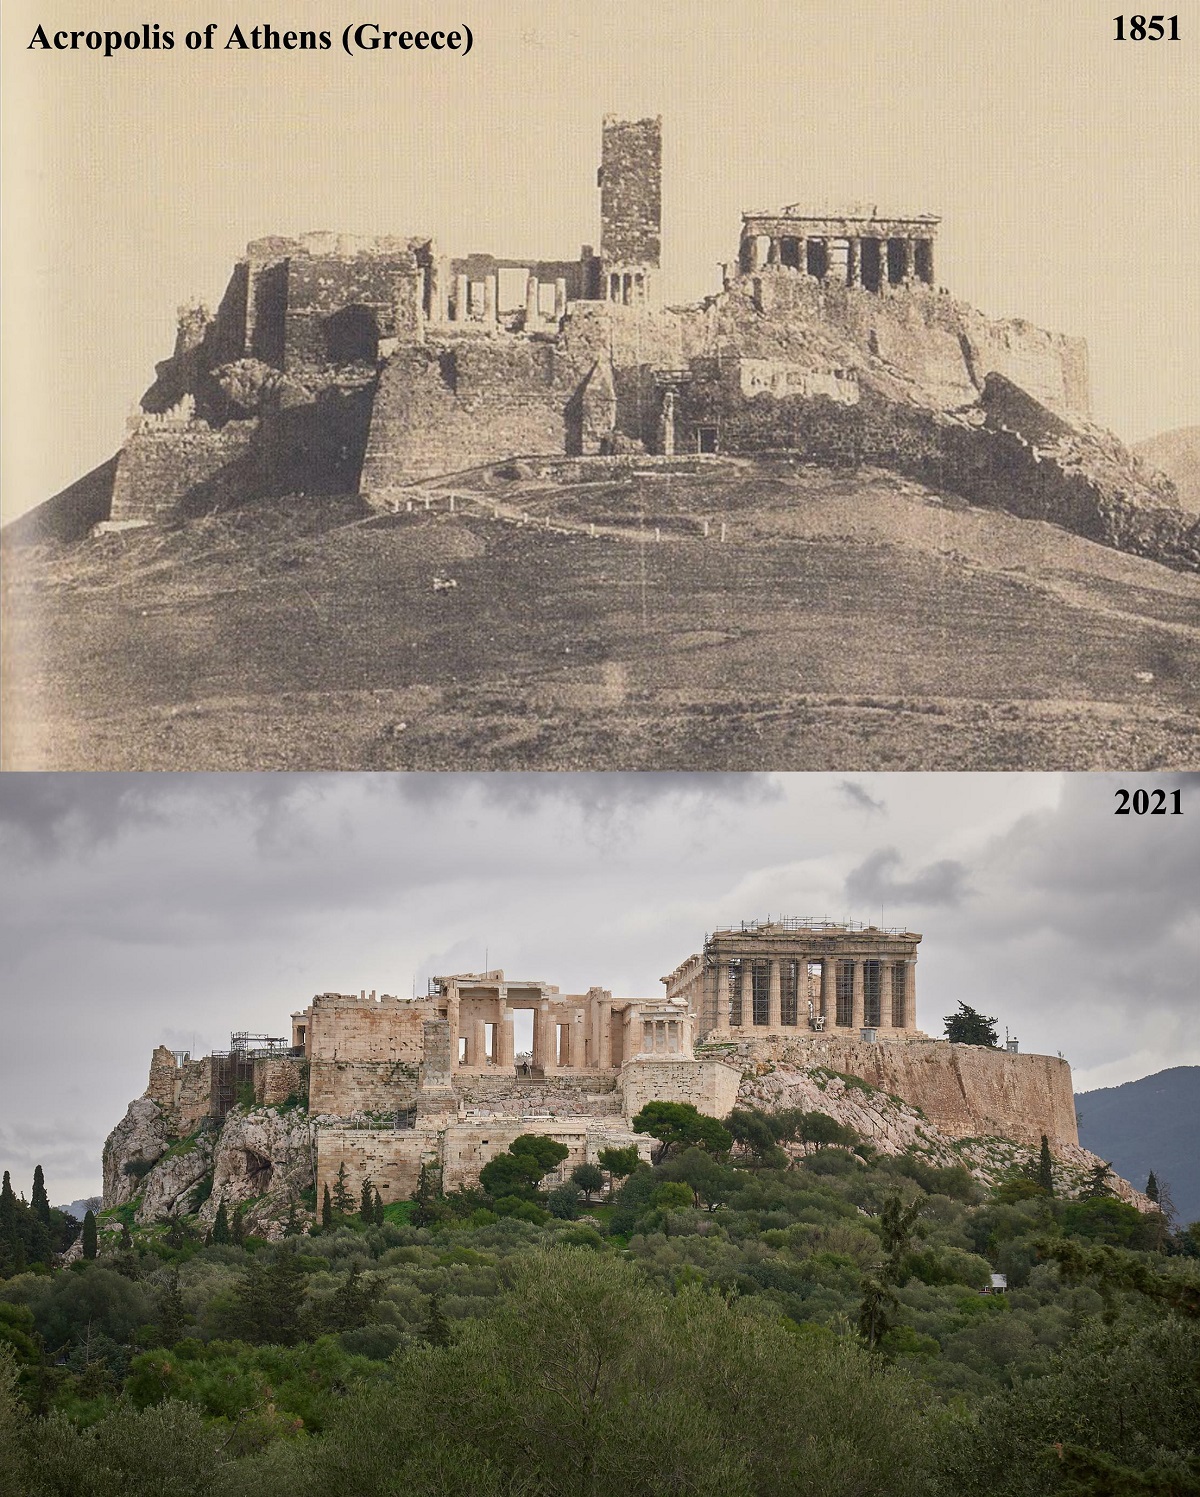 Acropolis Of Athens (Greece) 1851 Vs. 2021